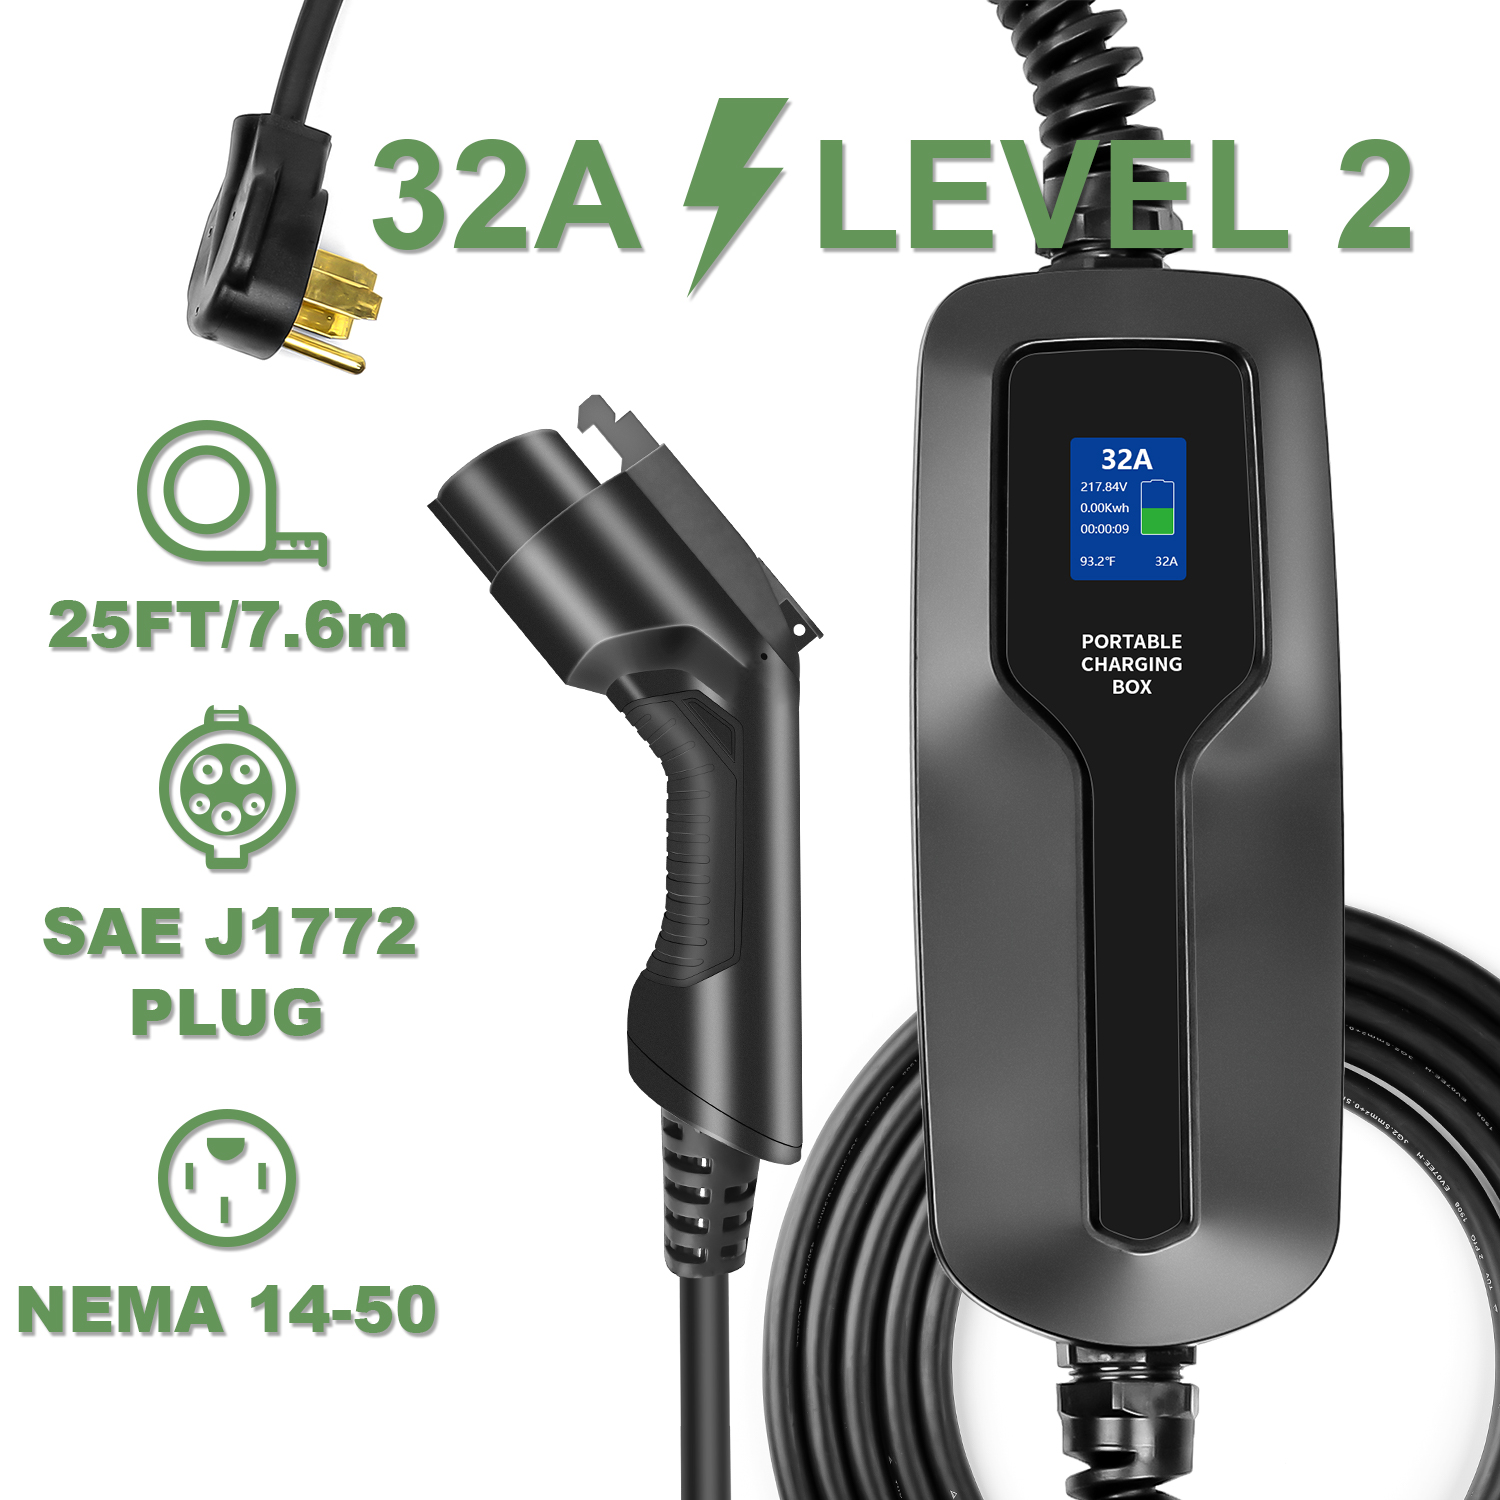 Portable EV Charger Level 2 with NEMA 14-50 Plug EV Charging Box, EV